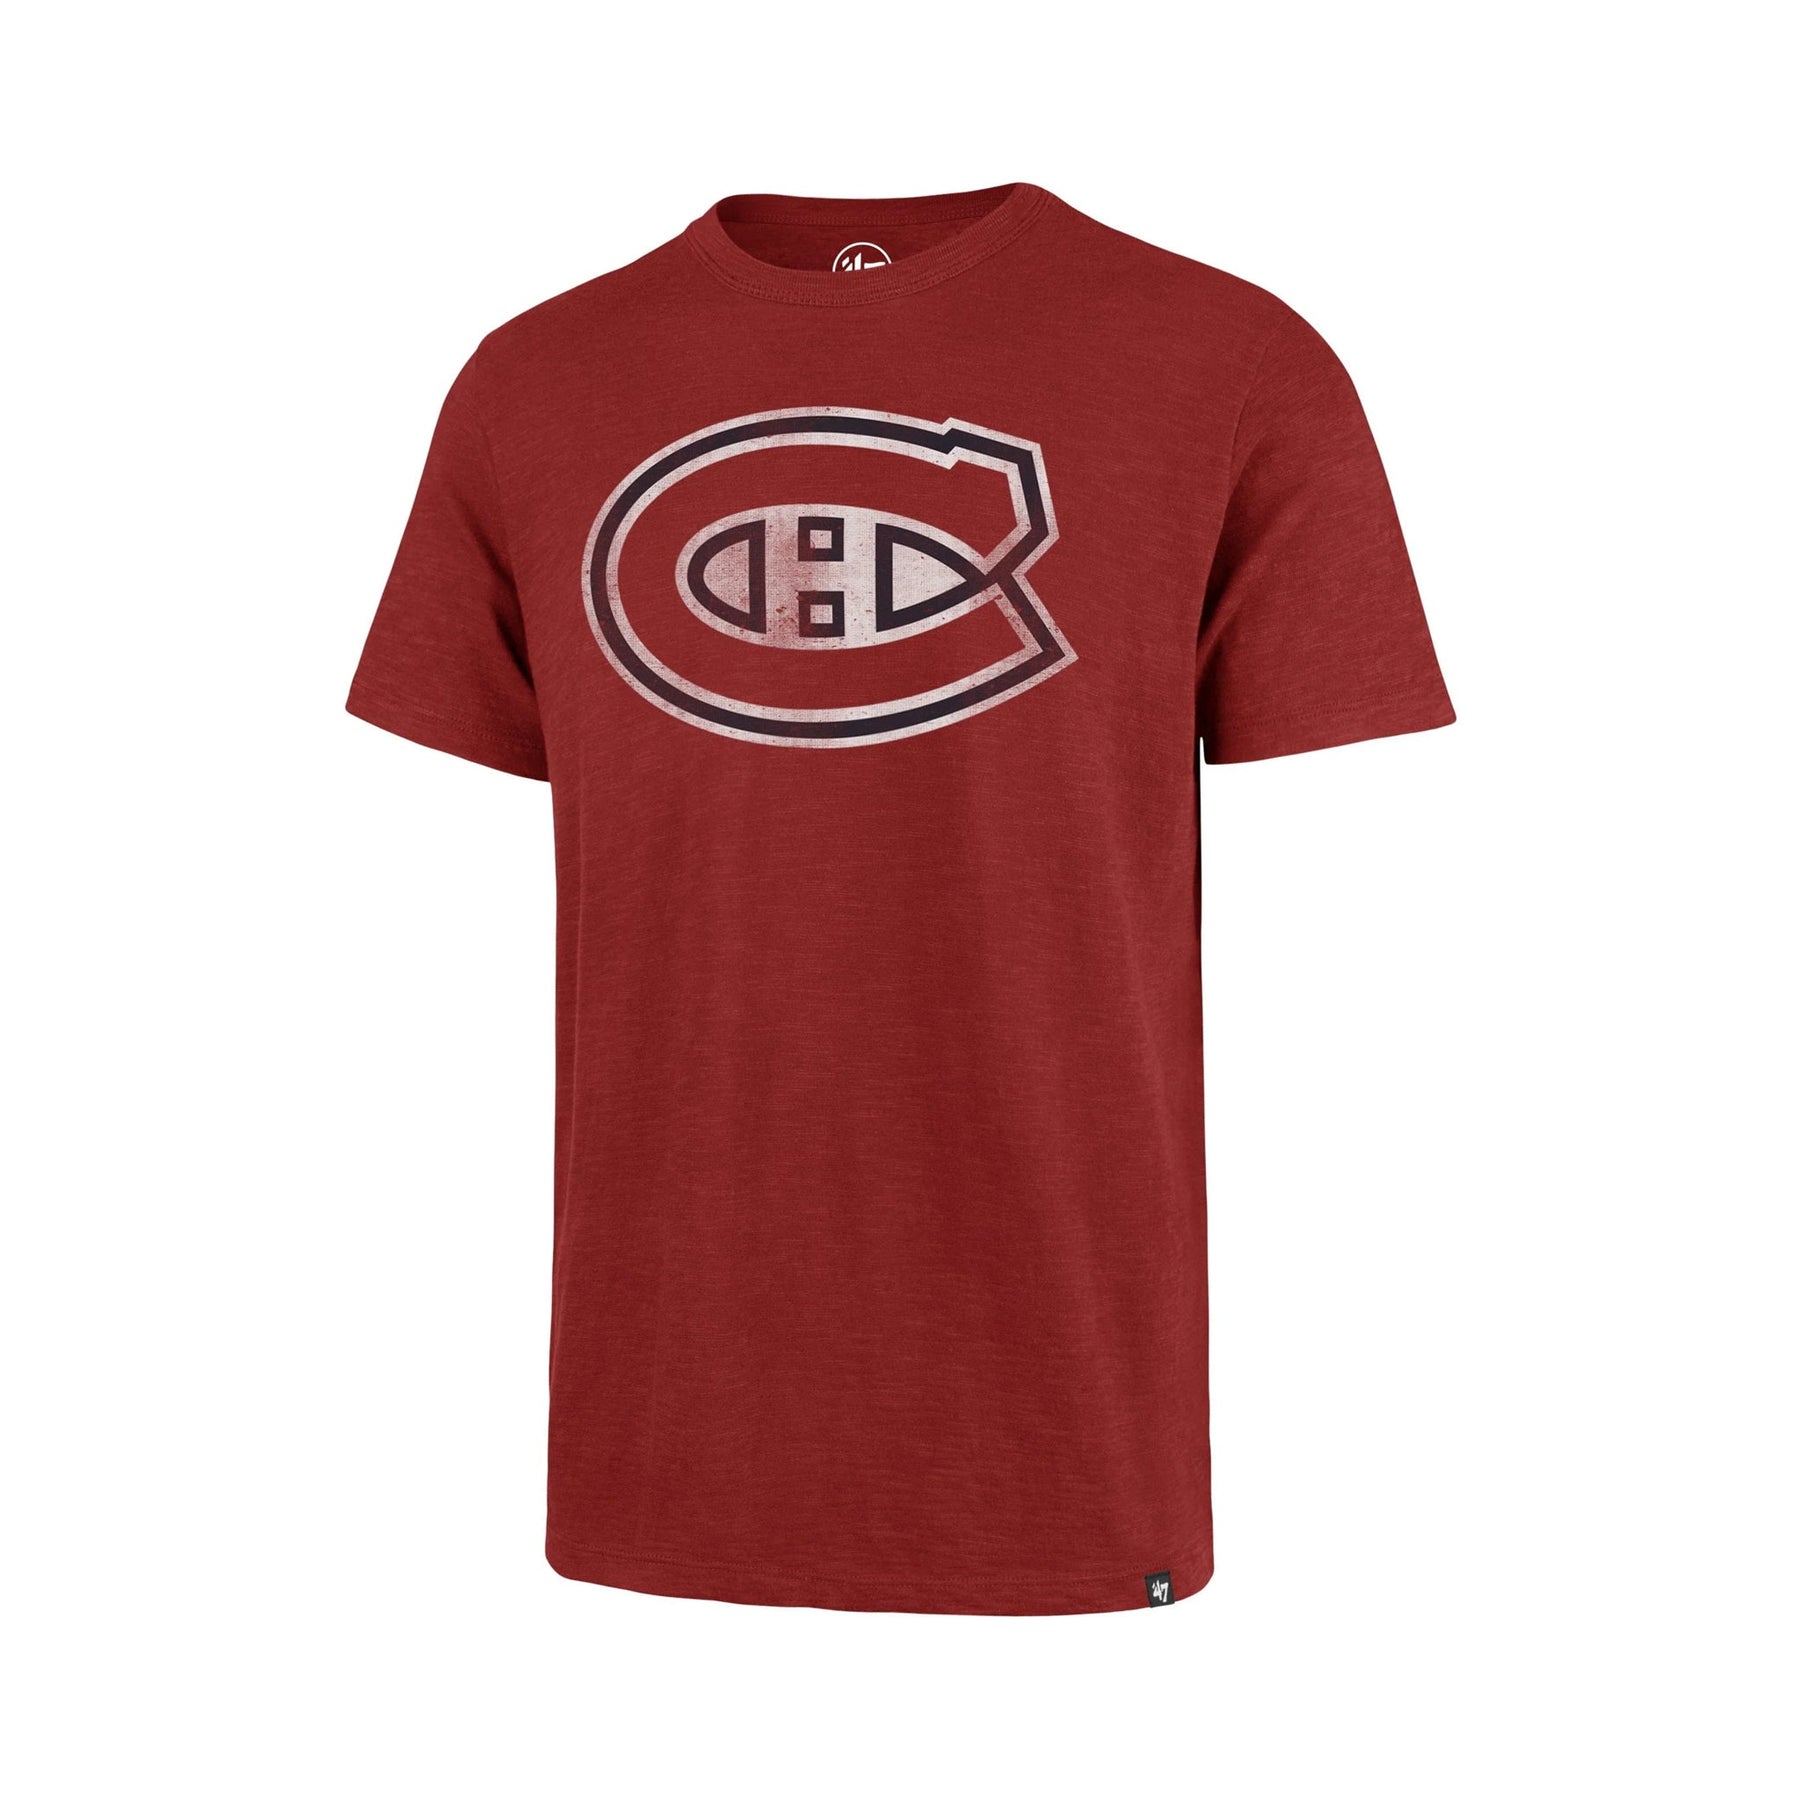 Montreal Canadiens 47 Brand NHL Grit Scrum Shirt